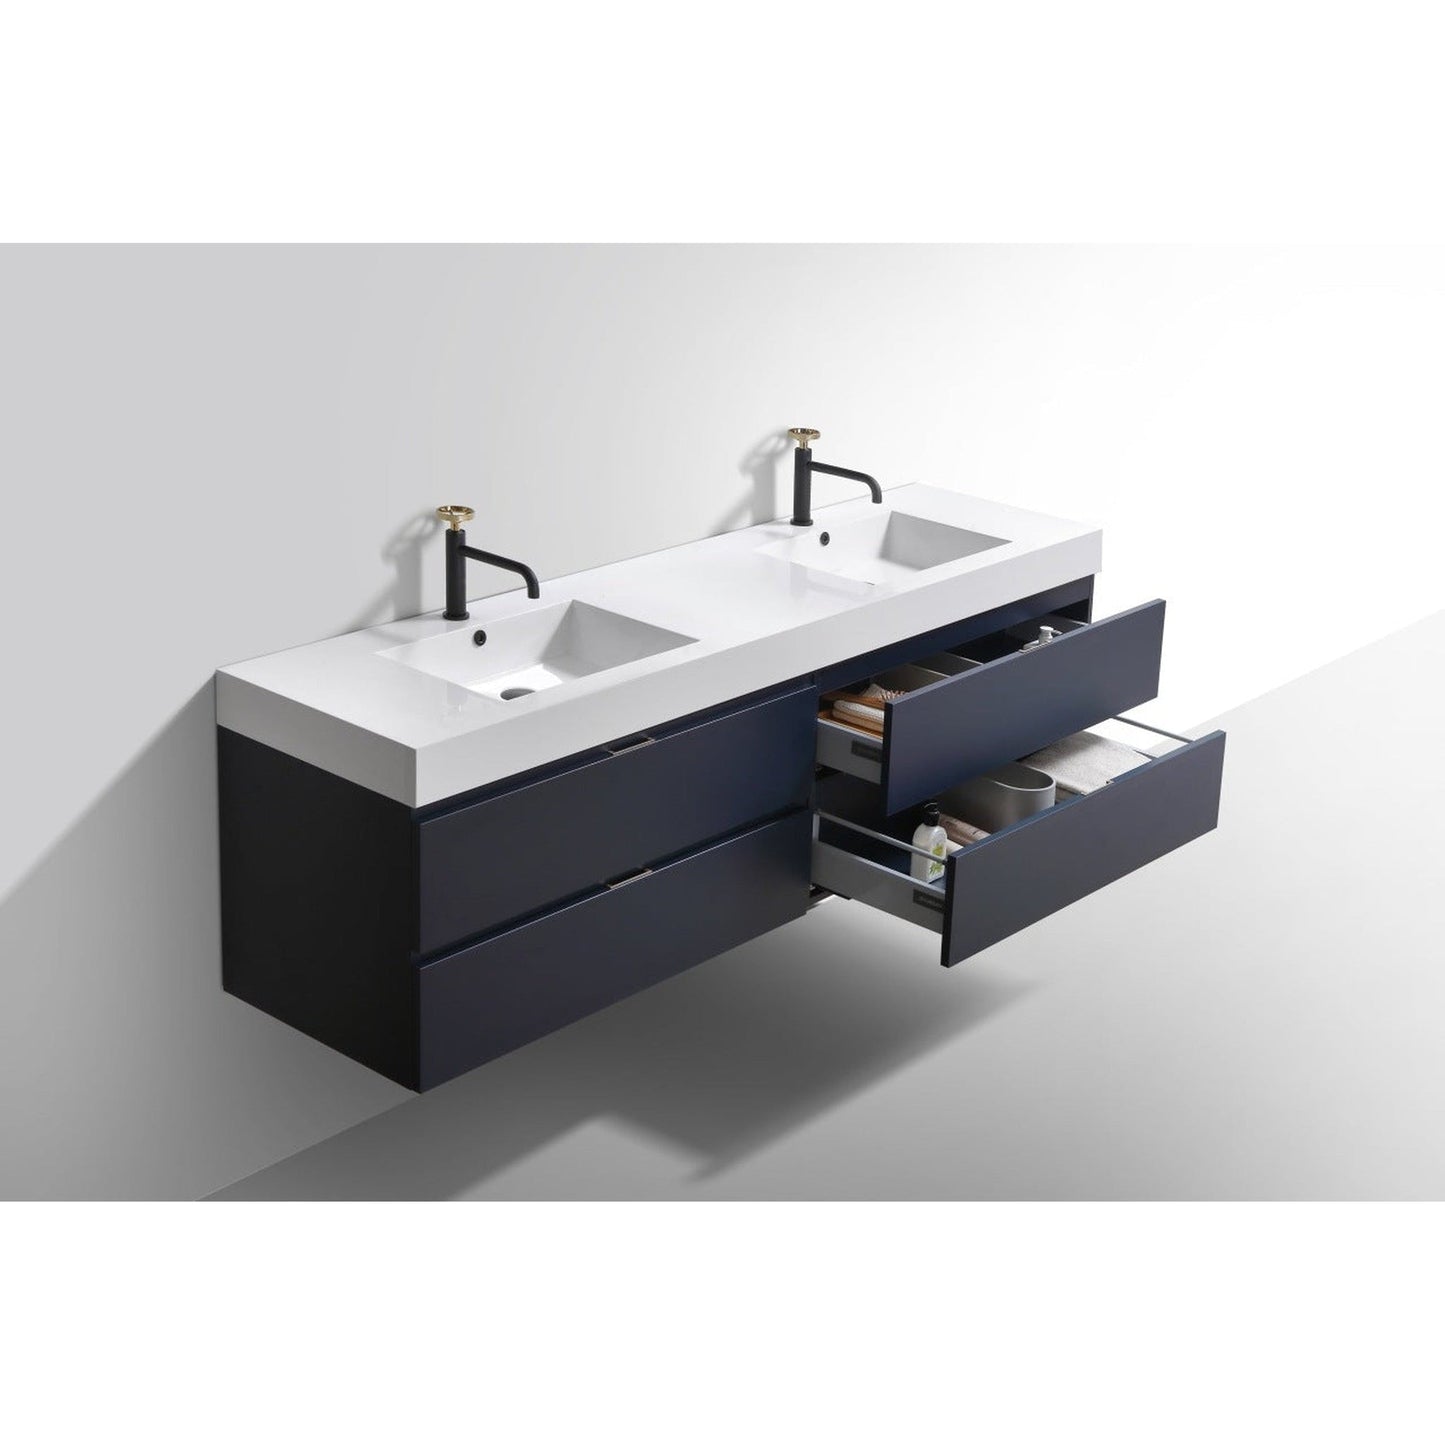 KubeBath Bliss 80" Blue Wall-Mounted Modern Bathroom Vanity With Double Integrated Acrylic Sink With Overflow